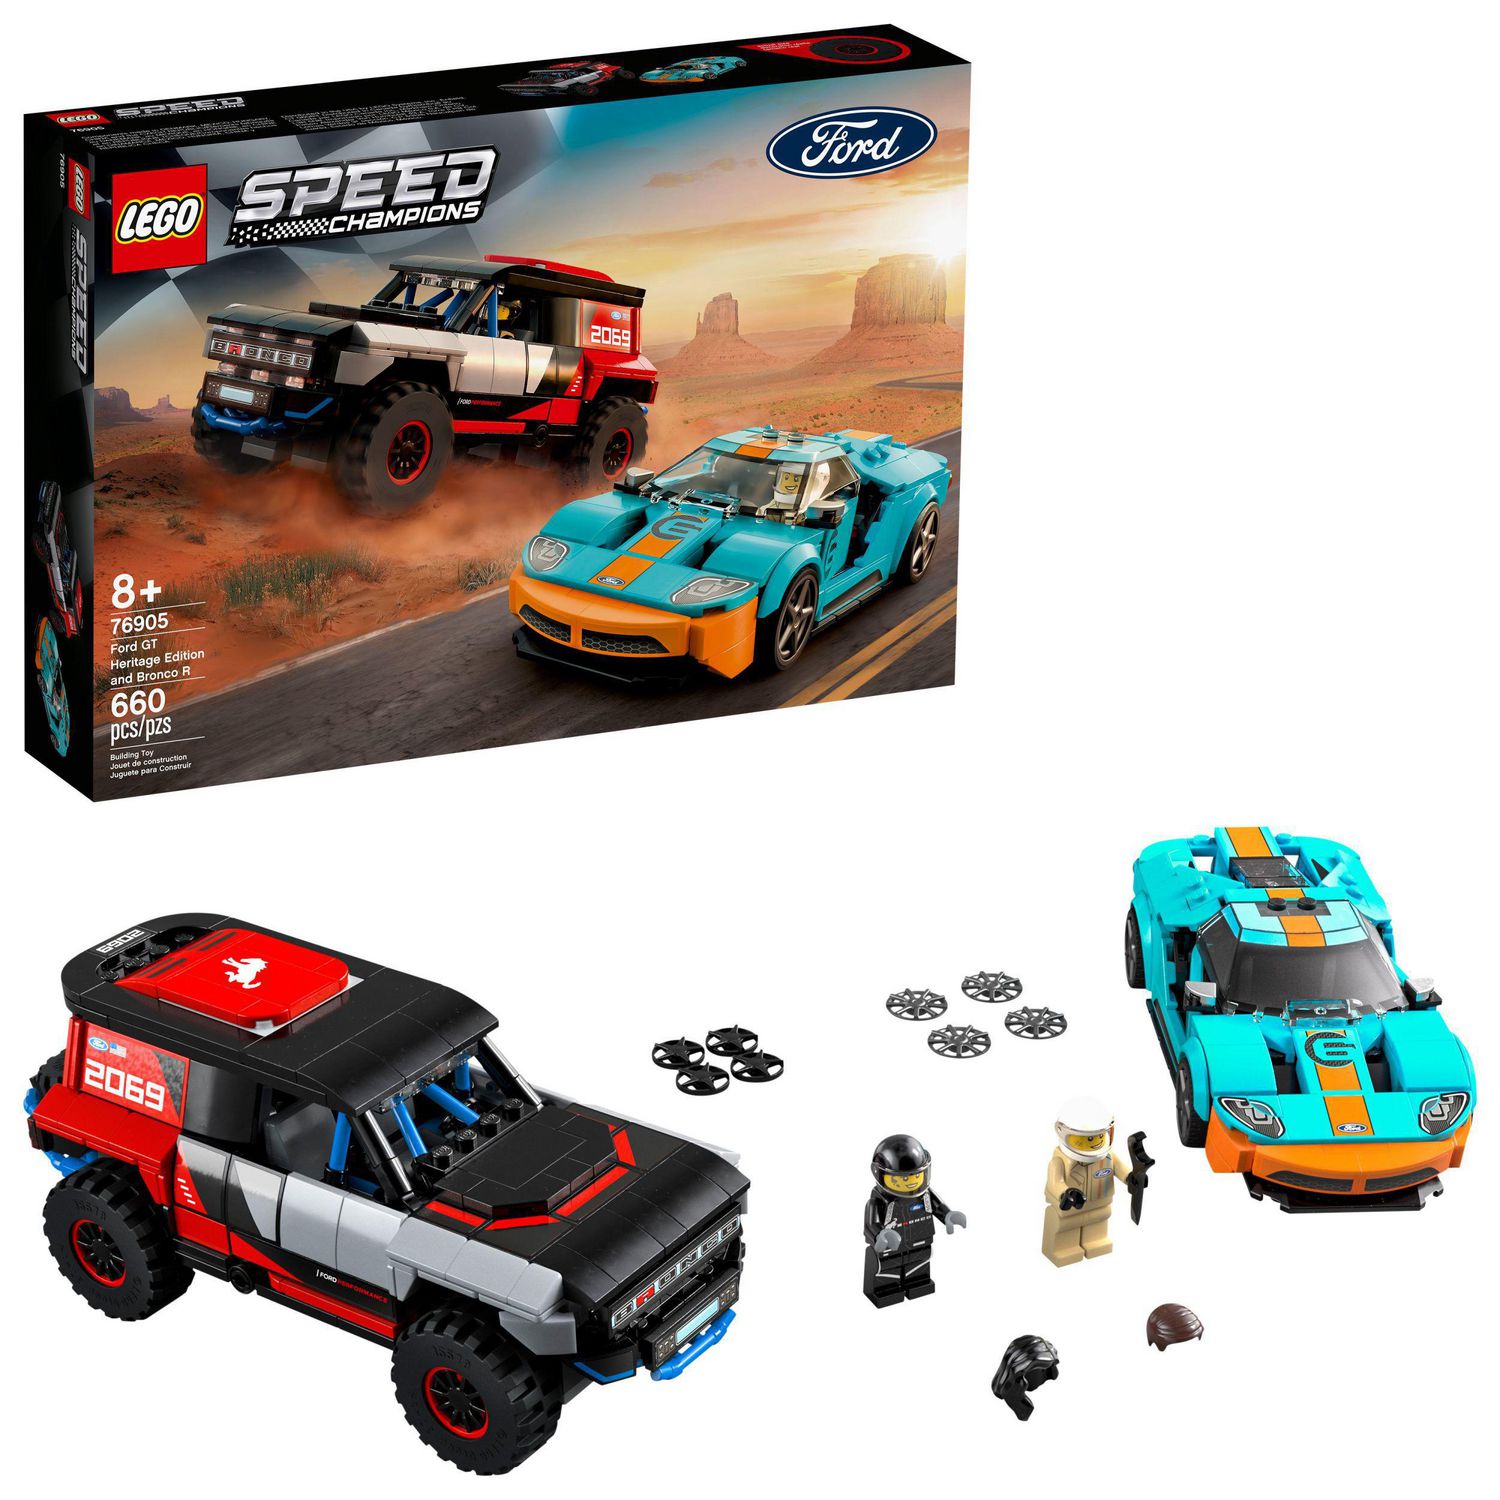 Lego F1 2020 cars - How I have fought the off season blues! : r